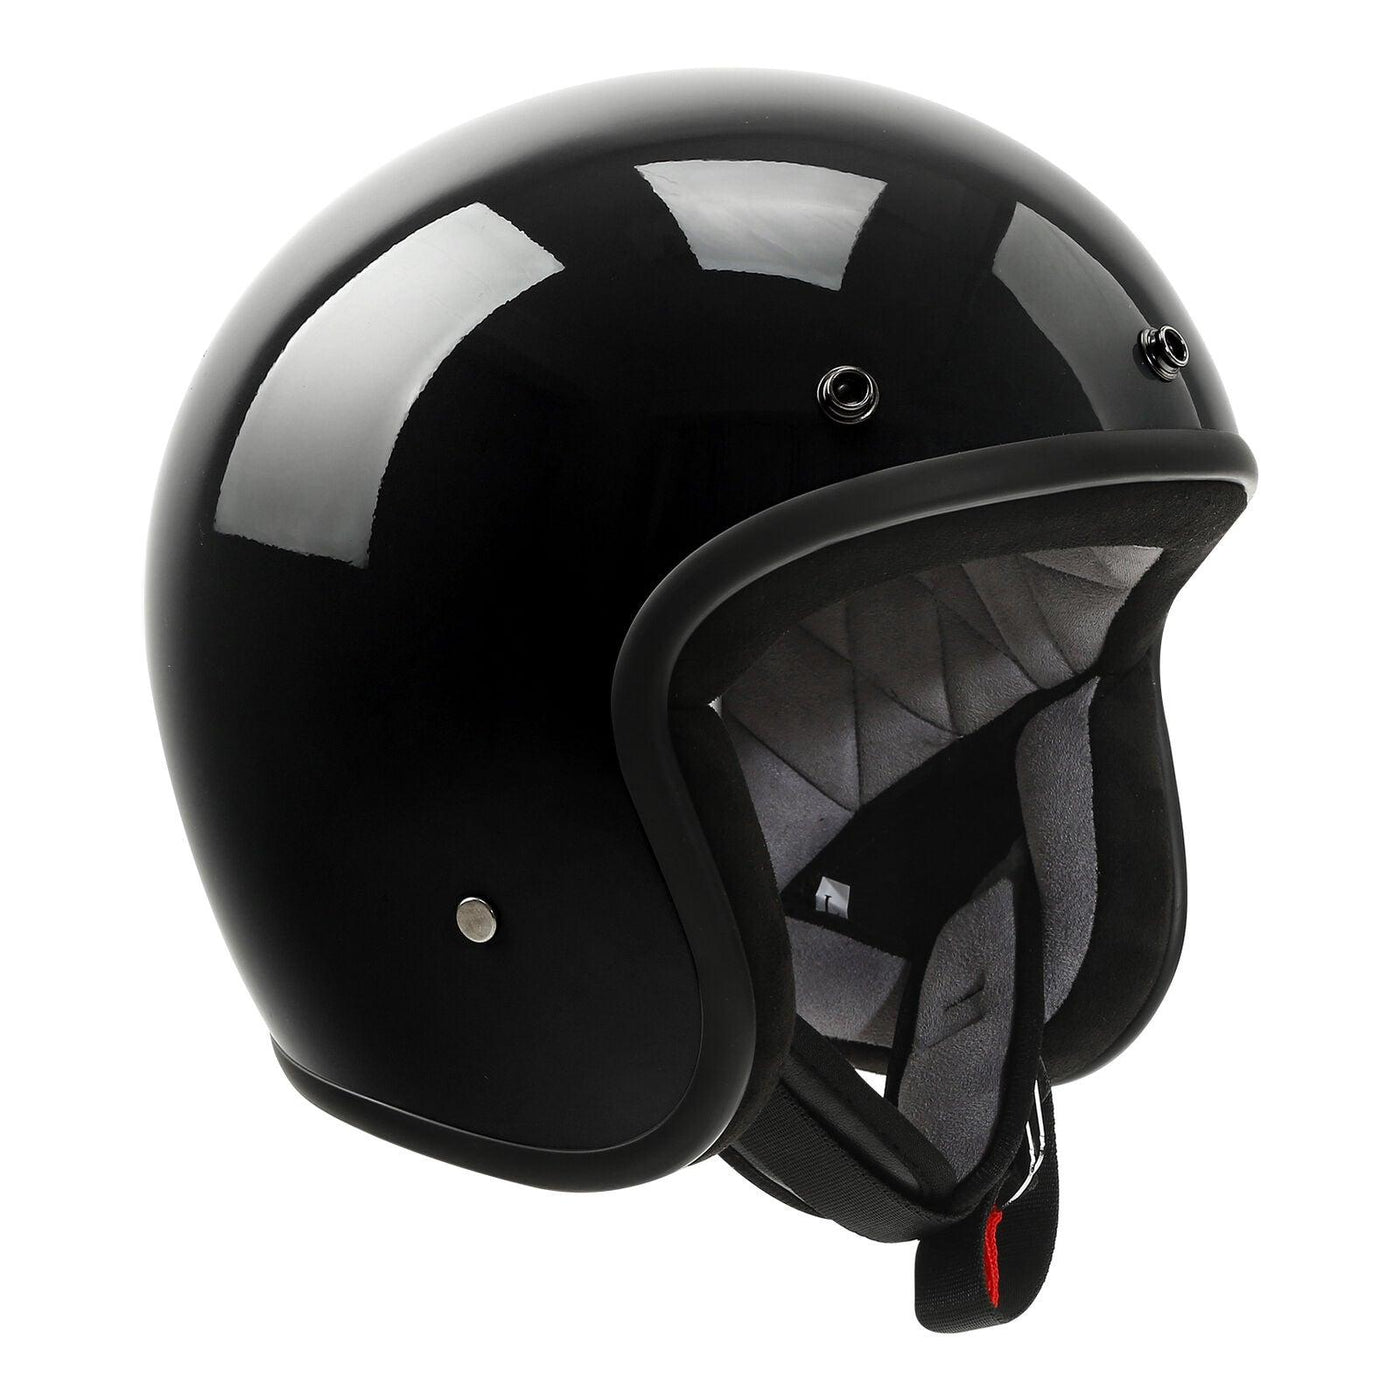 DOT 3/4 Open Face Helmet Adult Retro Vintage Black Motocross Scooter Bike M-XXL - Moto Life Products